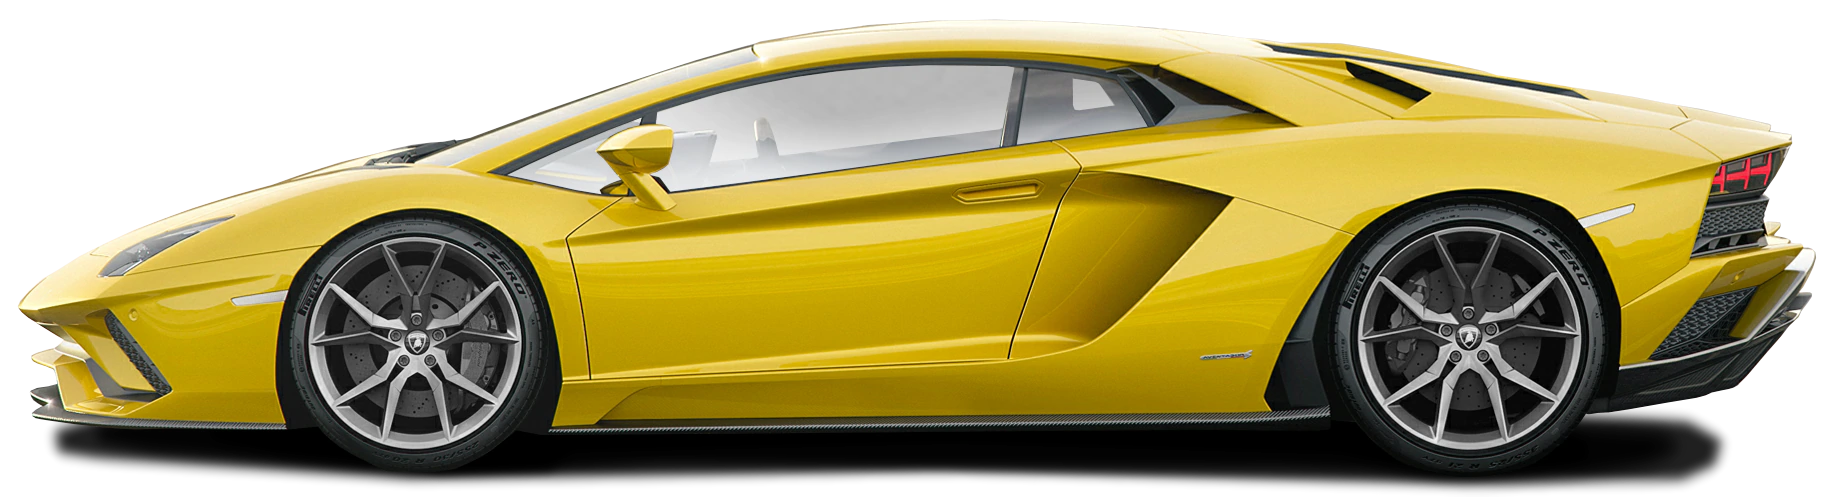 Download PNG image - Colorful Side View Lamborghini PNG Image 